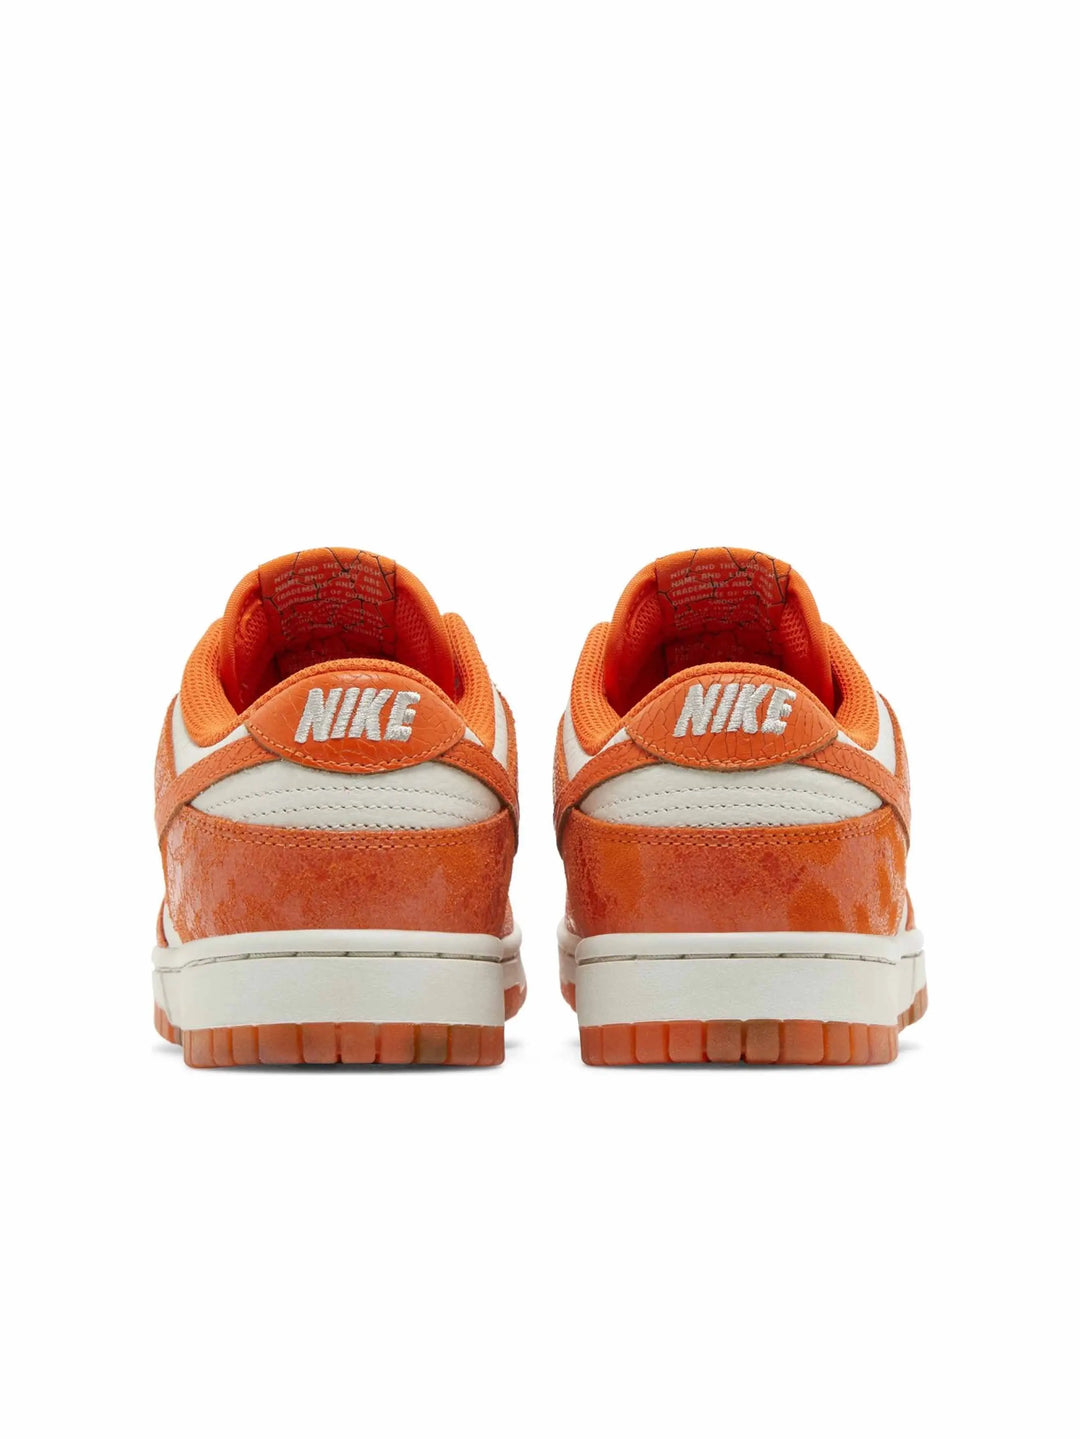 Nike Dunk Low Cracked Orange (W) in Melbourne, Australia - Prior